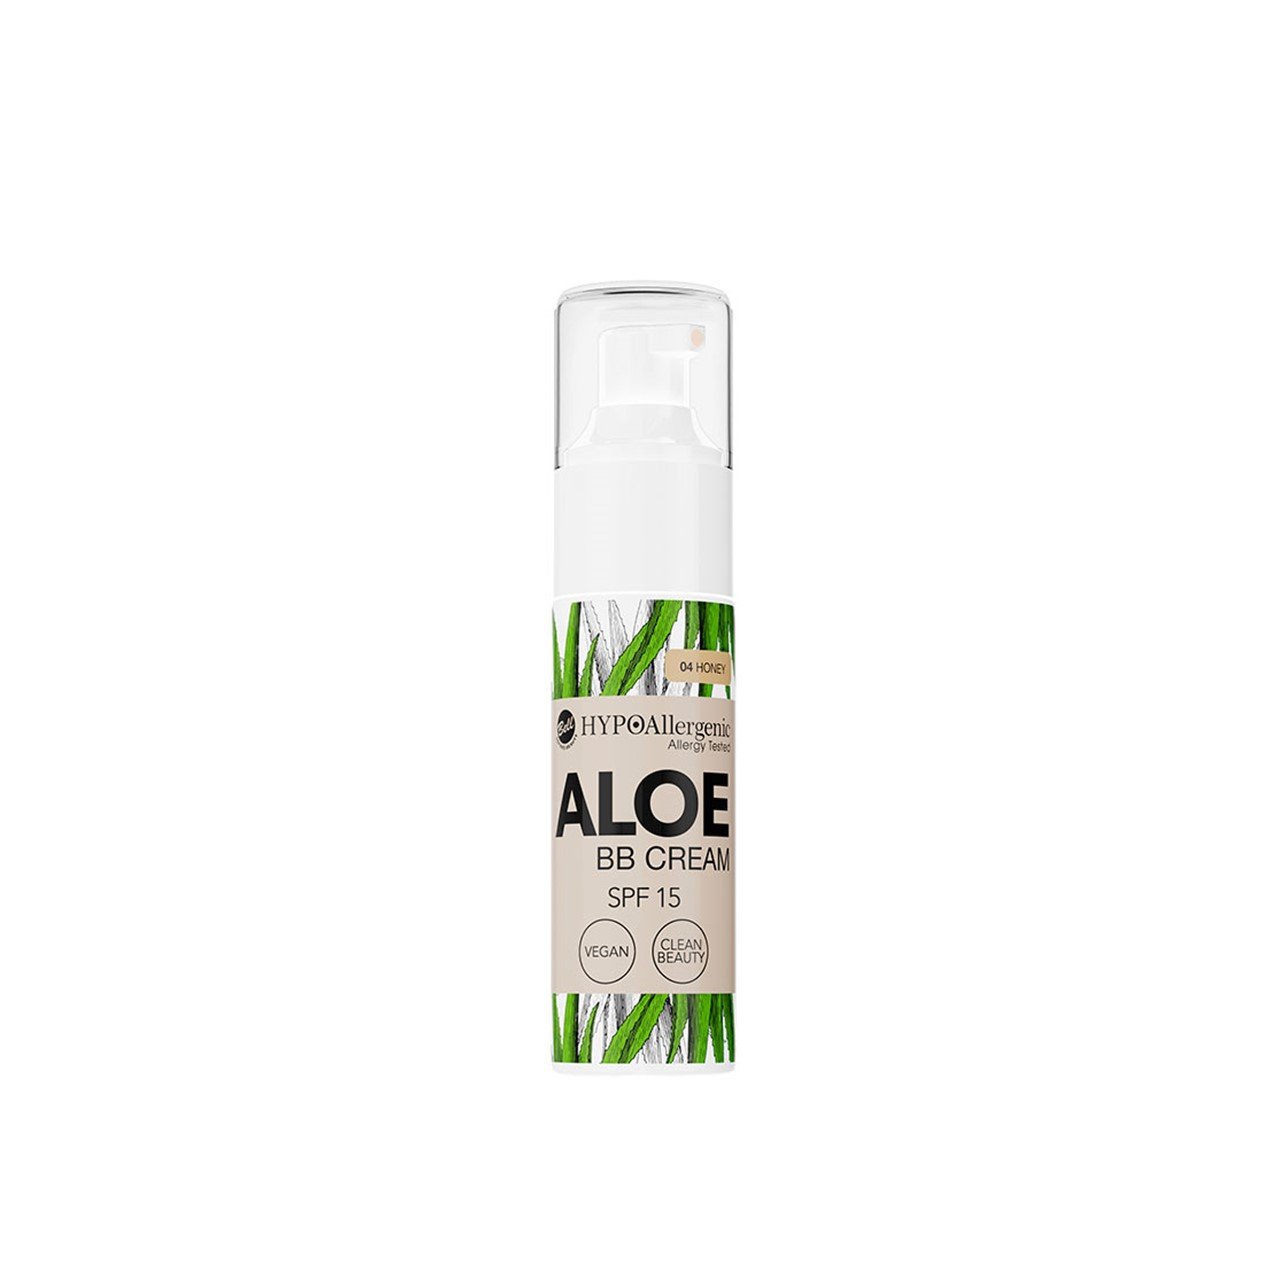 Bell HYPOAllergenic Aloe BB Cream SPF15 04 Honey 20g